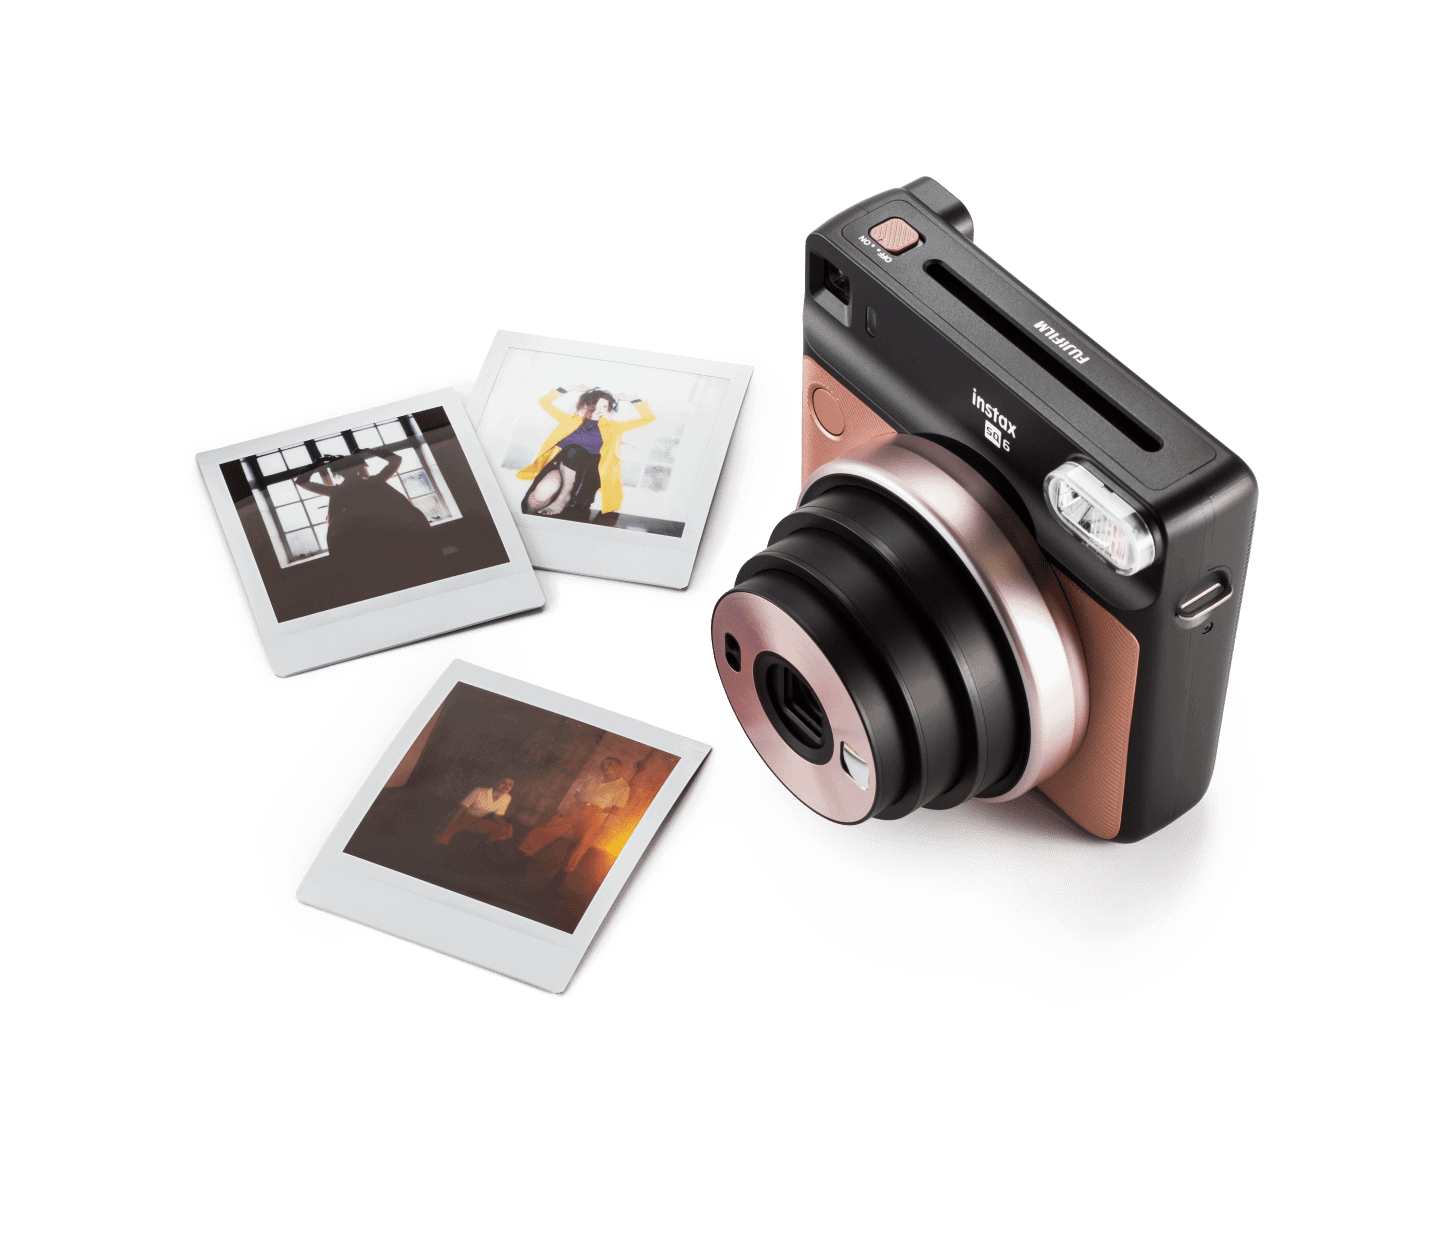 Fujifilm Instax Square SQ 6 Instant Camera Black